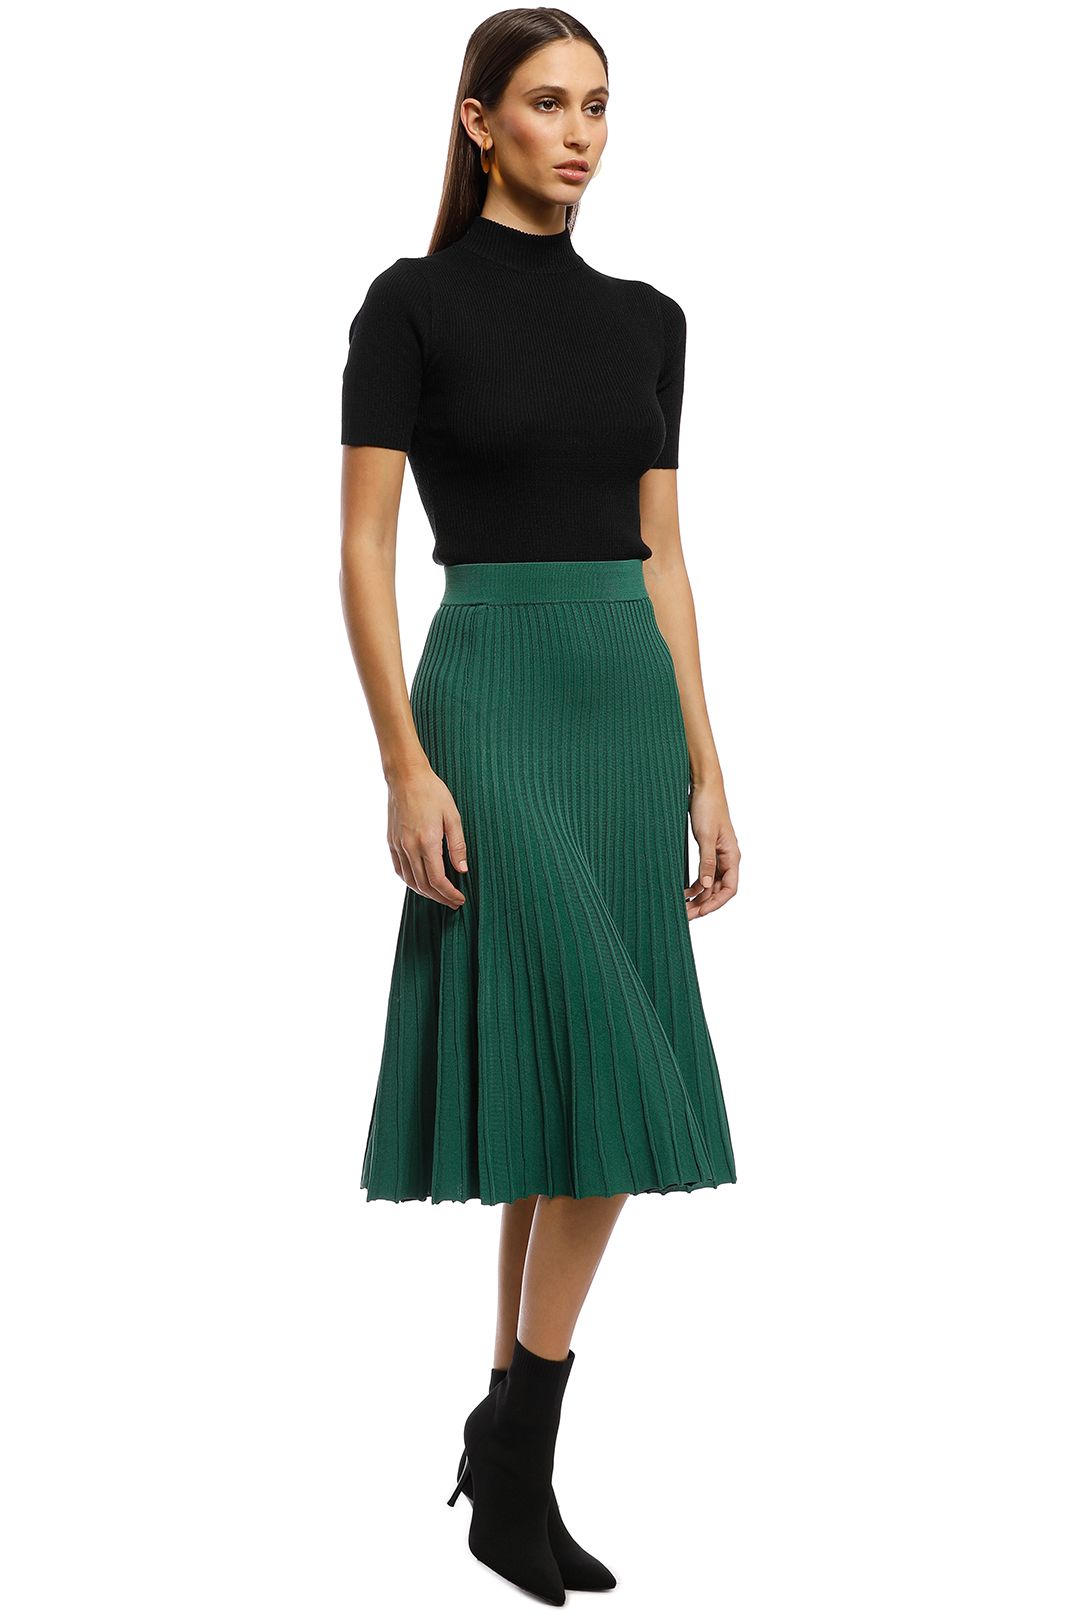 Saba - Ruby Rib Knit Skirt - Green - Side